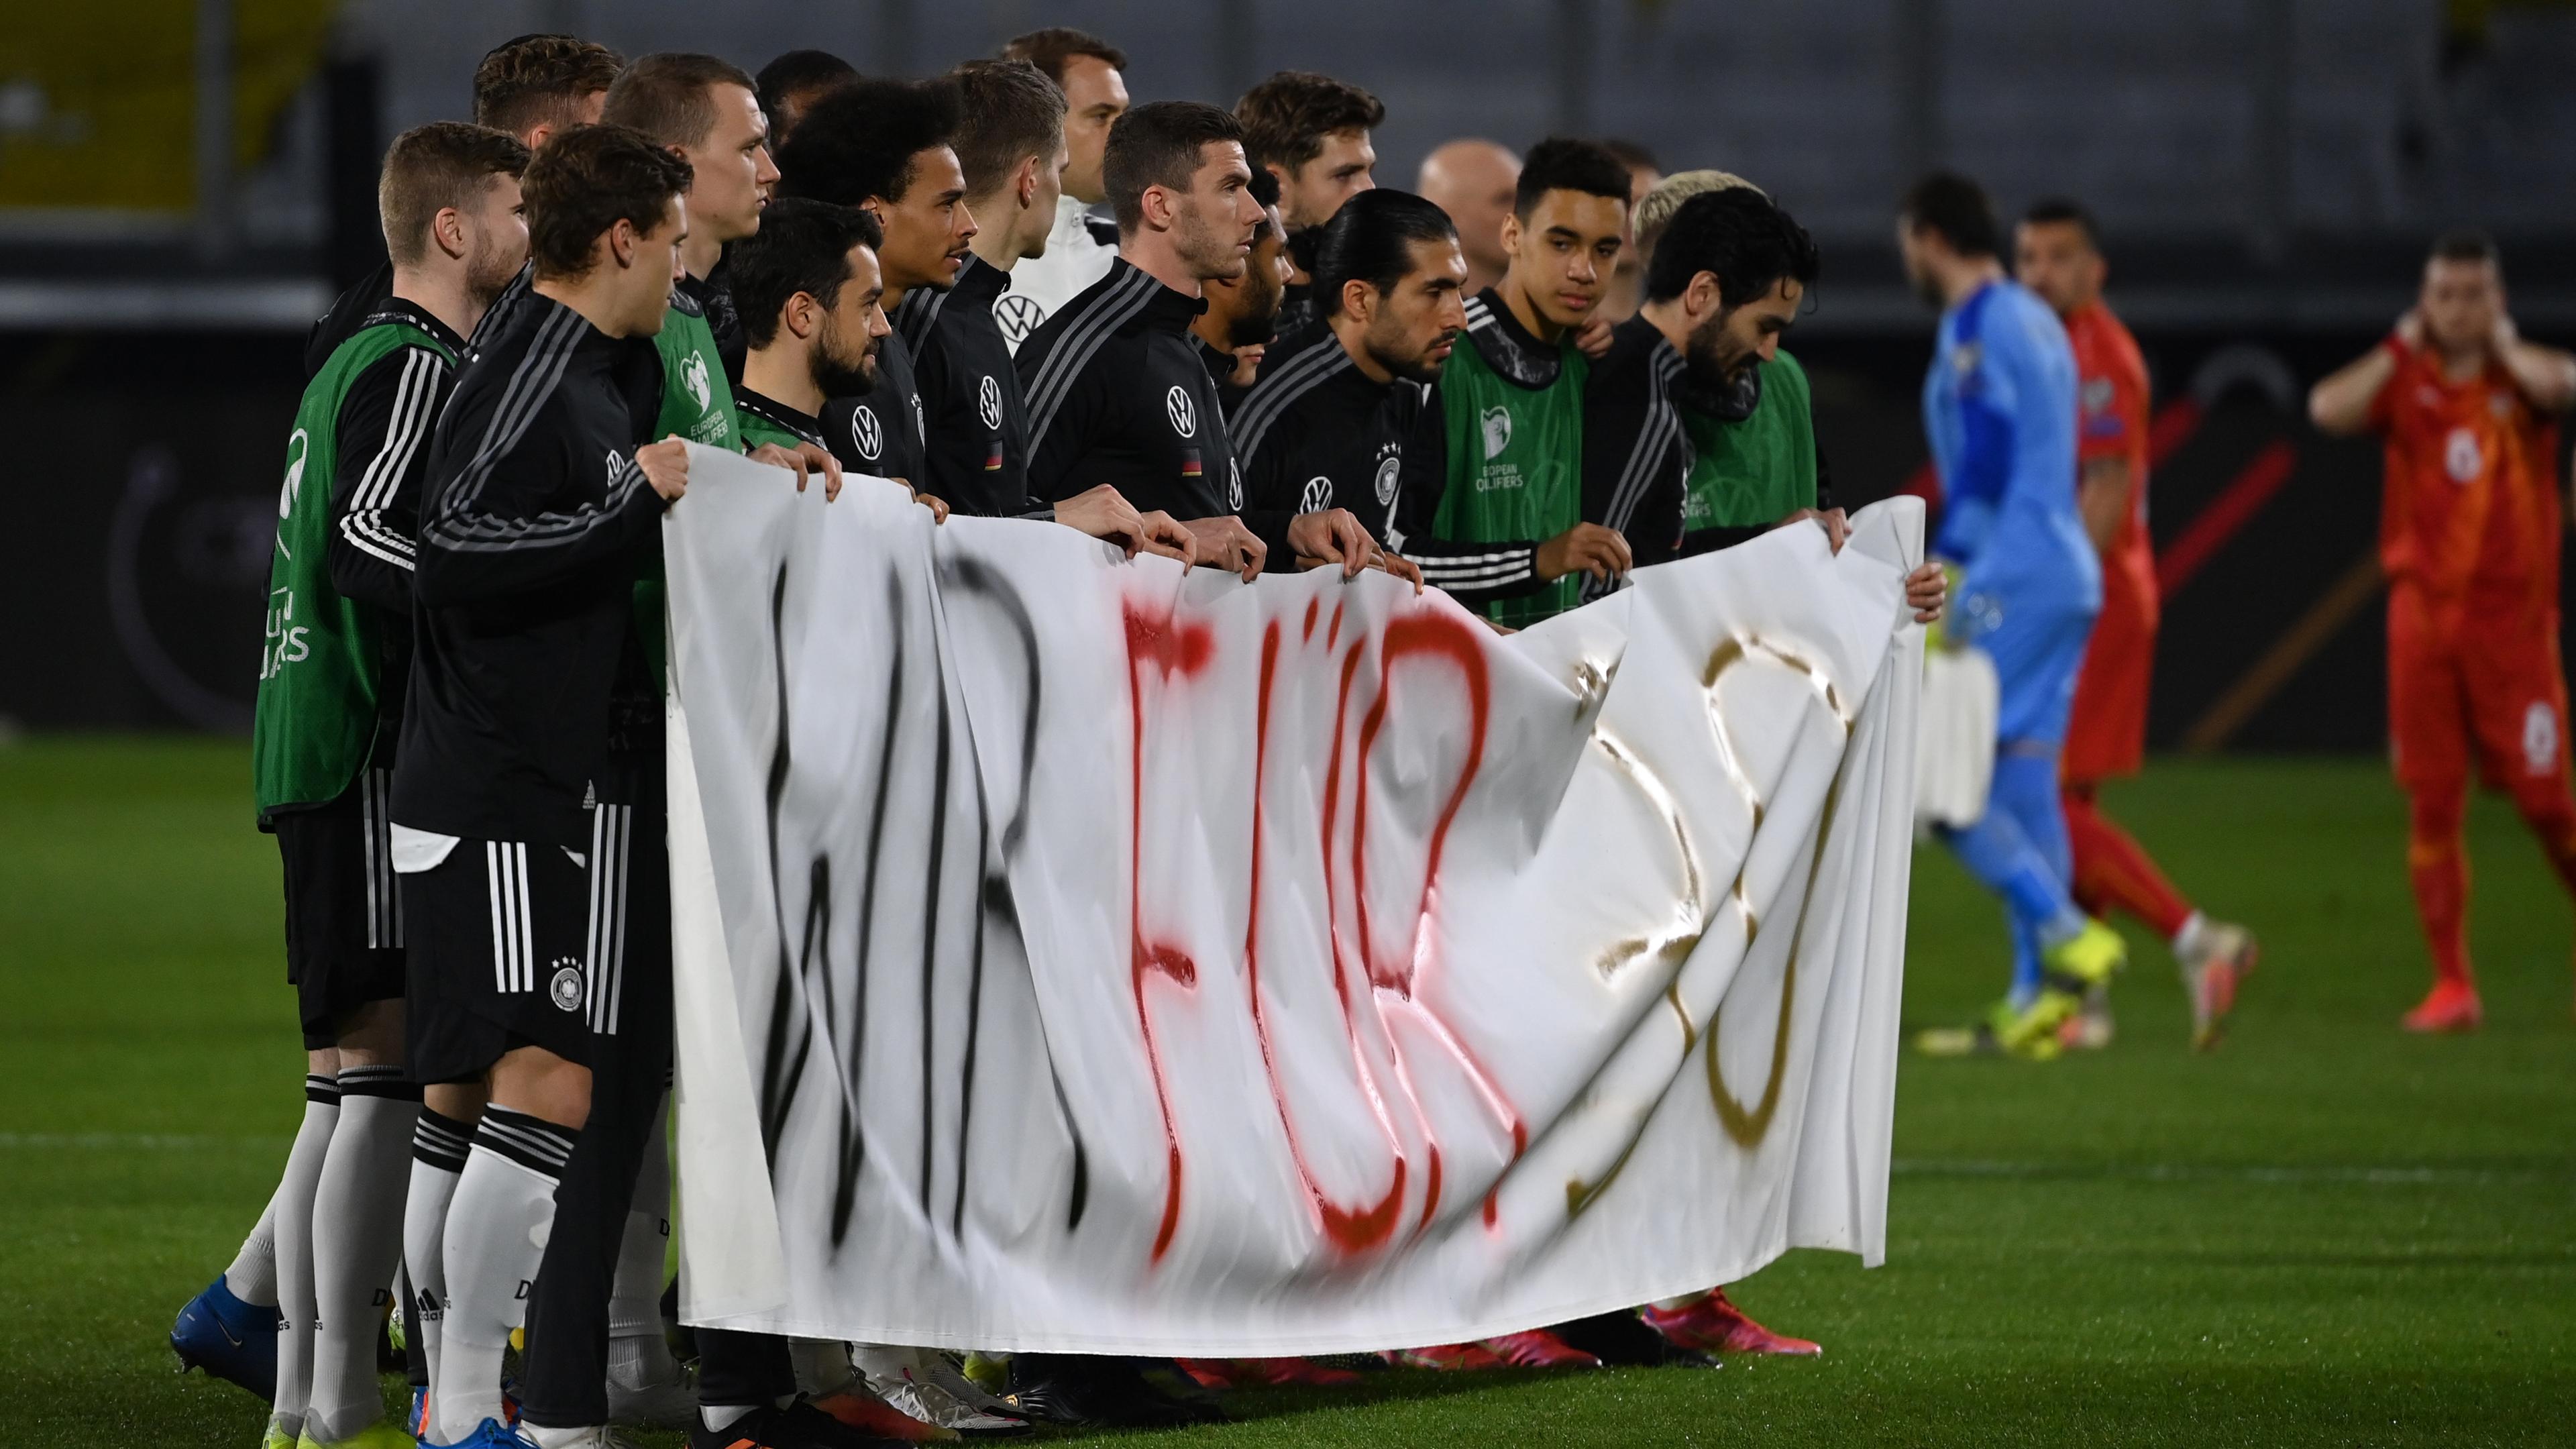 Fussball Wm 2022 Deutliche Kritik An Katar Zdfheute